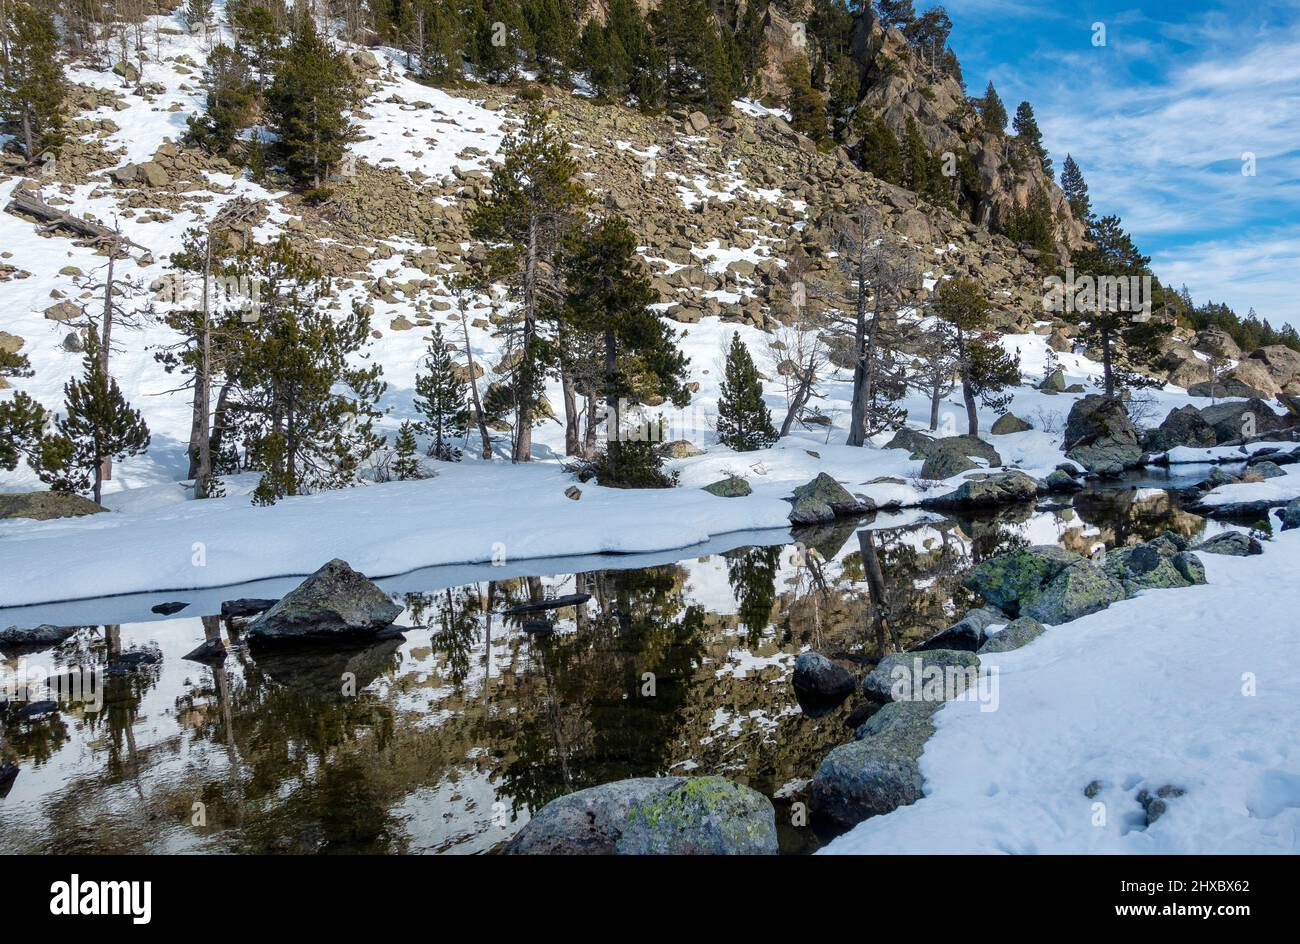 Winter mountain scenery in the Aigüestortes i Estany de Sant Maurici National Park near Espot, Catalonia, Spain Stock Photo